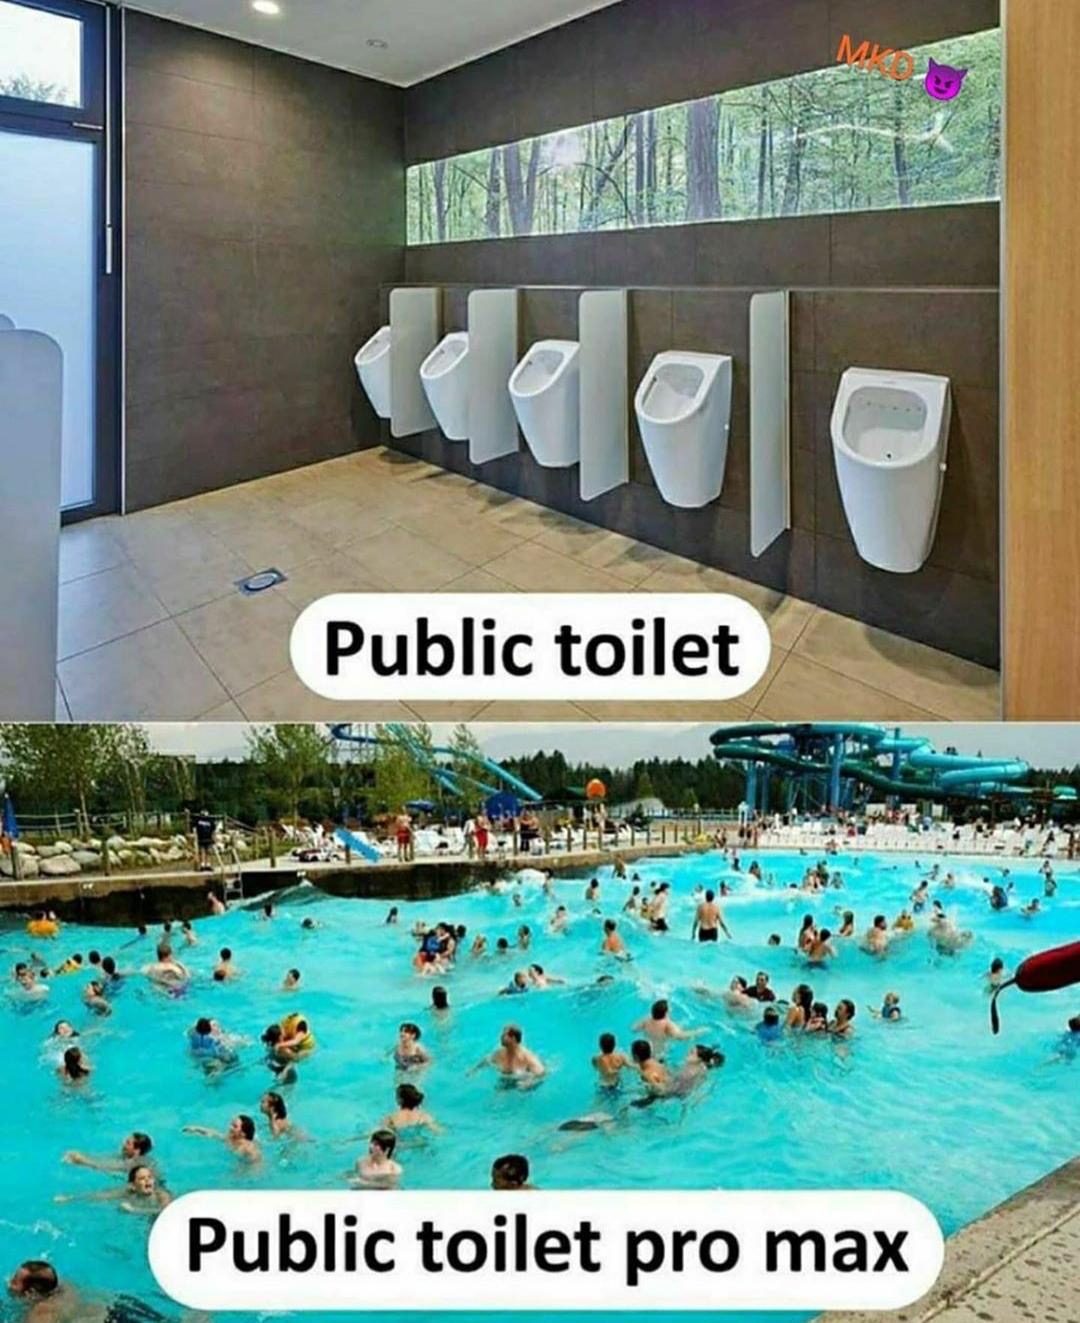 hugeplateofketchup8 - comfort room design - Public toilet Public toilet pro max